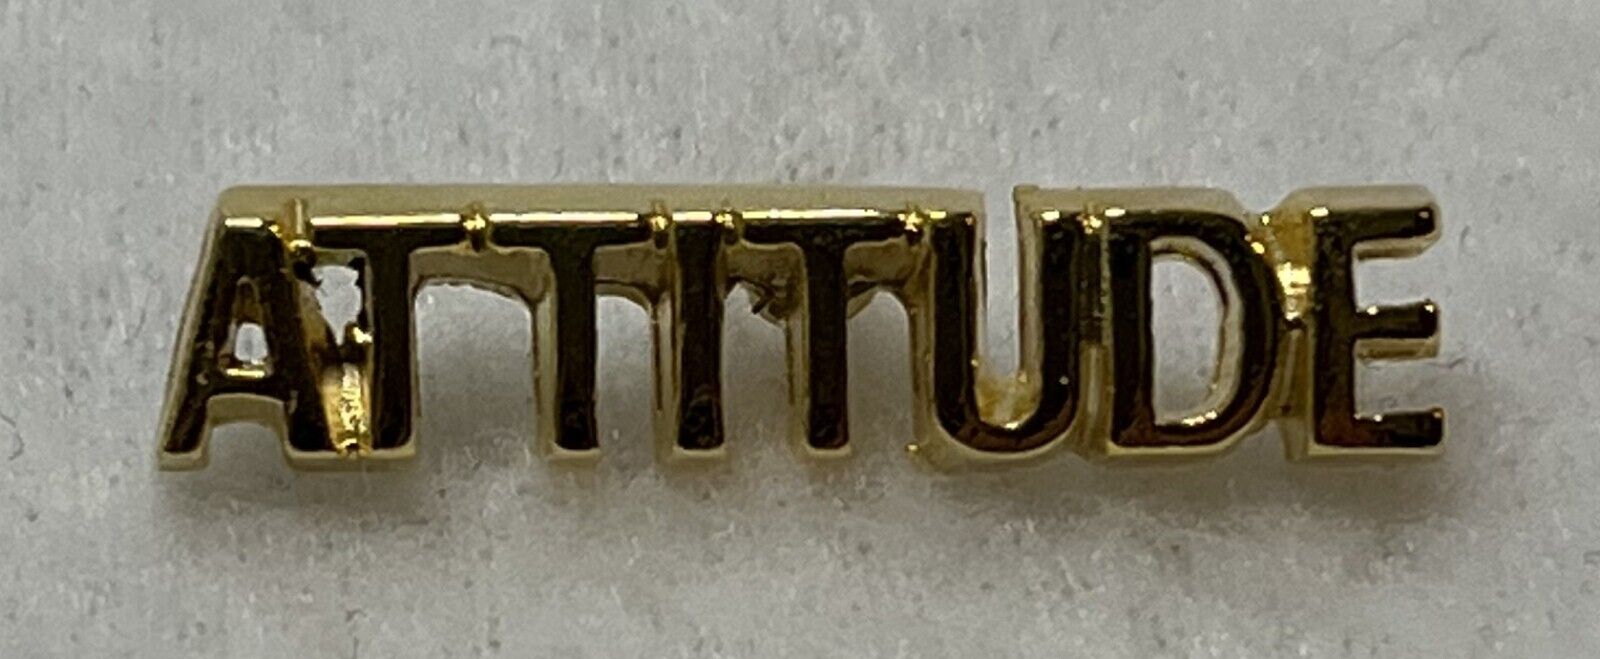 Vintage ATTITUDE Slogan  Metal Lapel Pin Button Без бренда